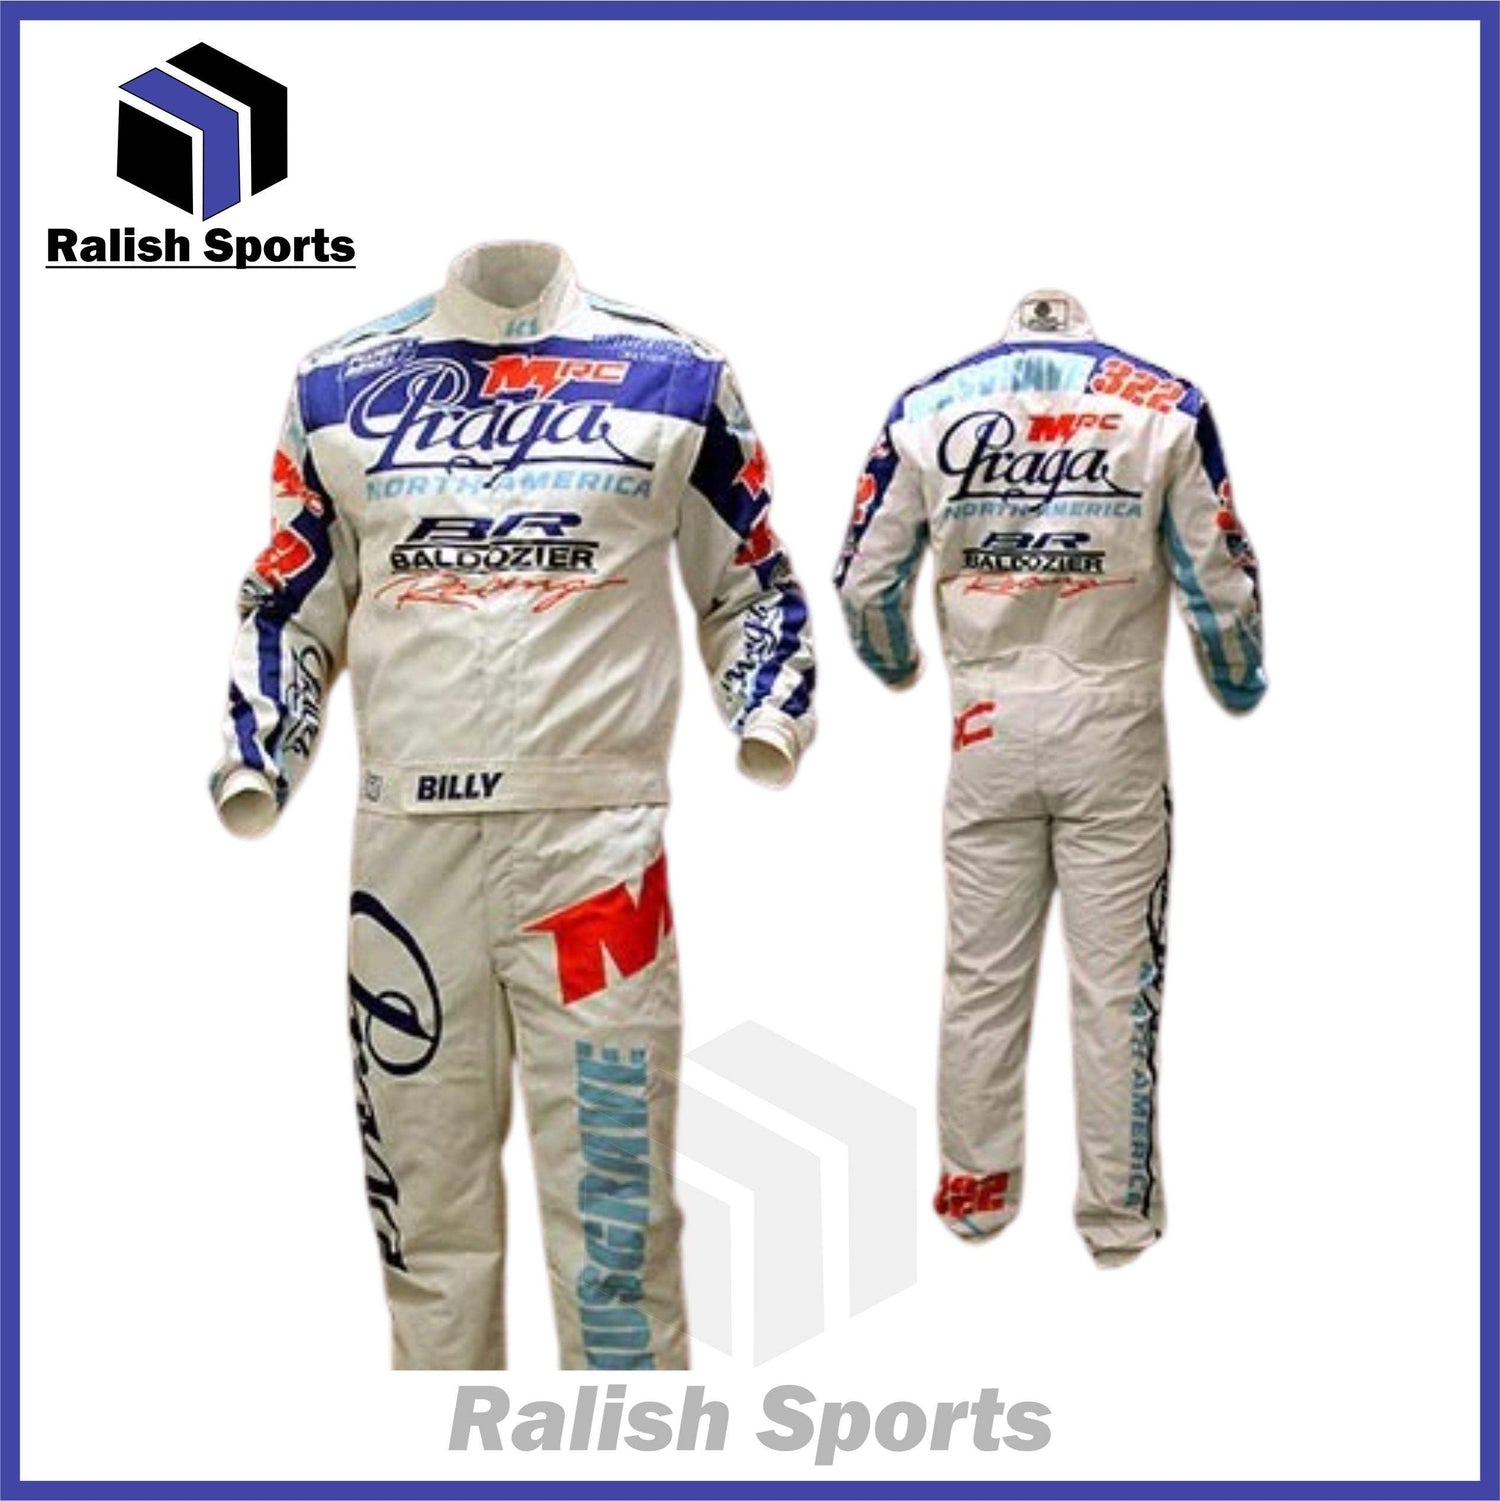 Praga Auto Racing Suit - Ralish Sports